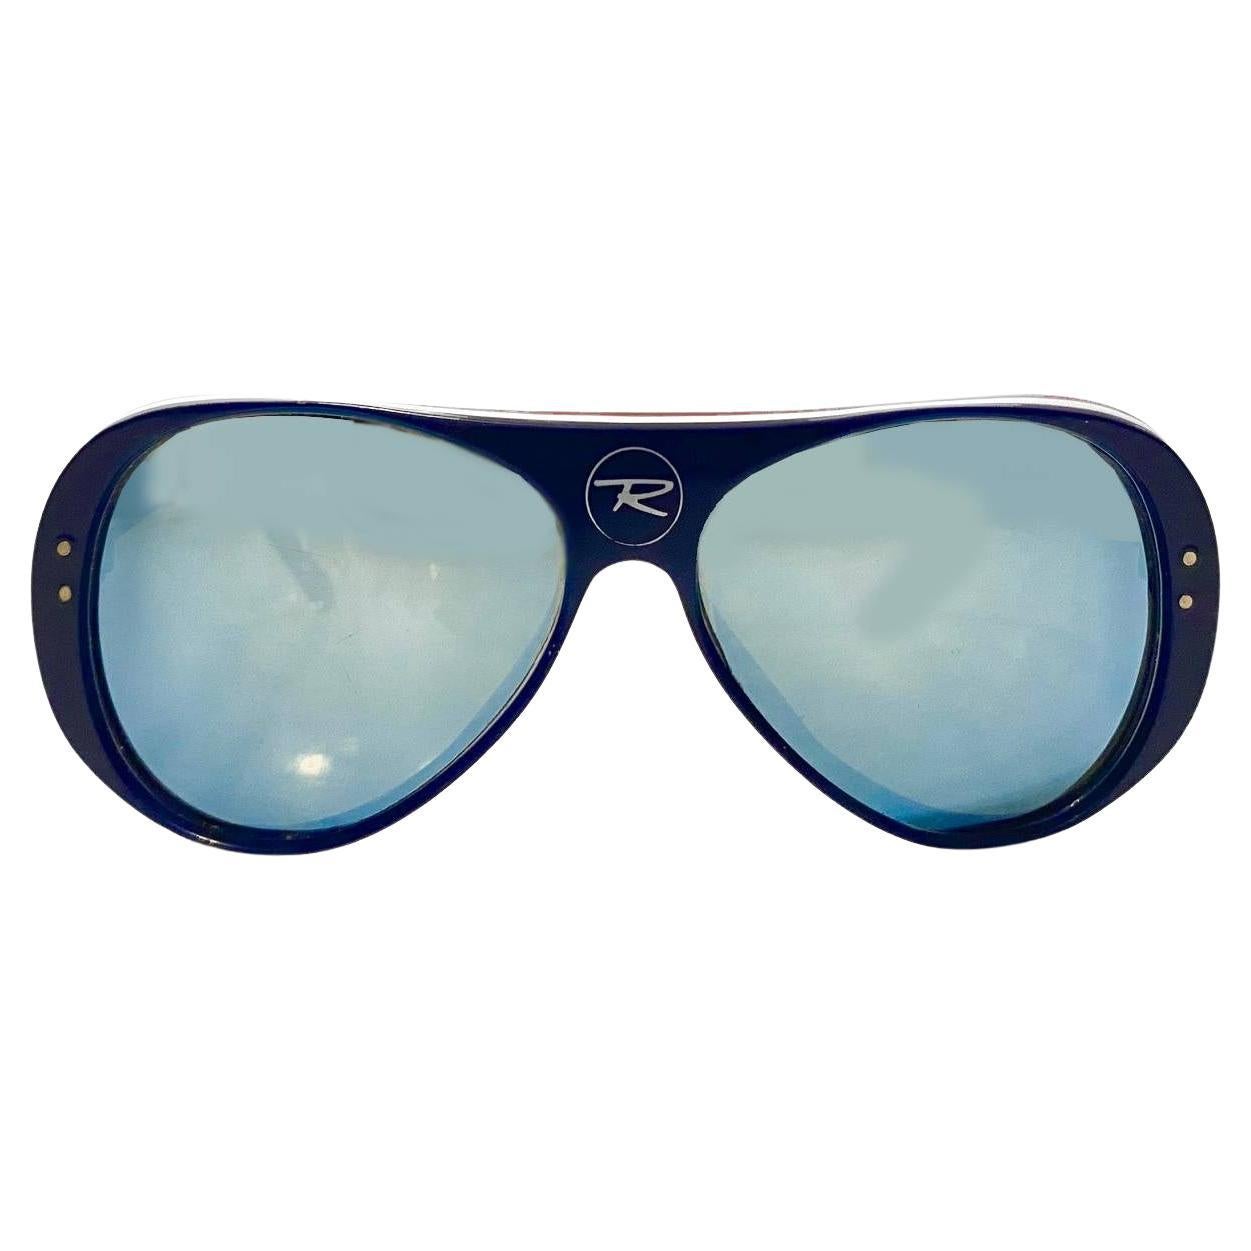 1980s Rossignol Mirrored Sunglasses 